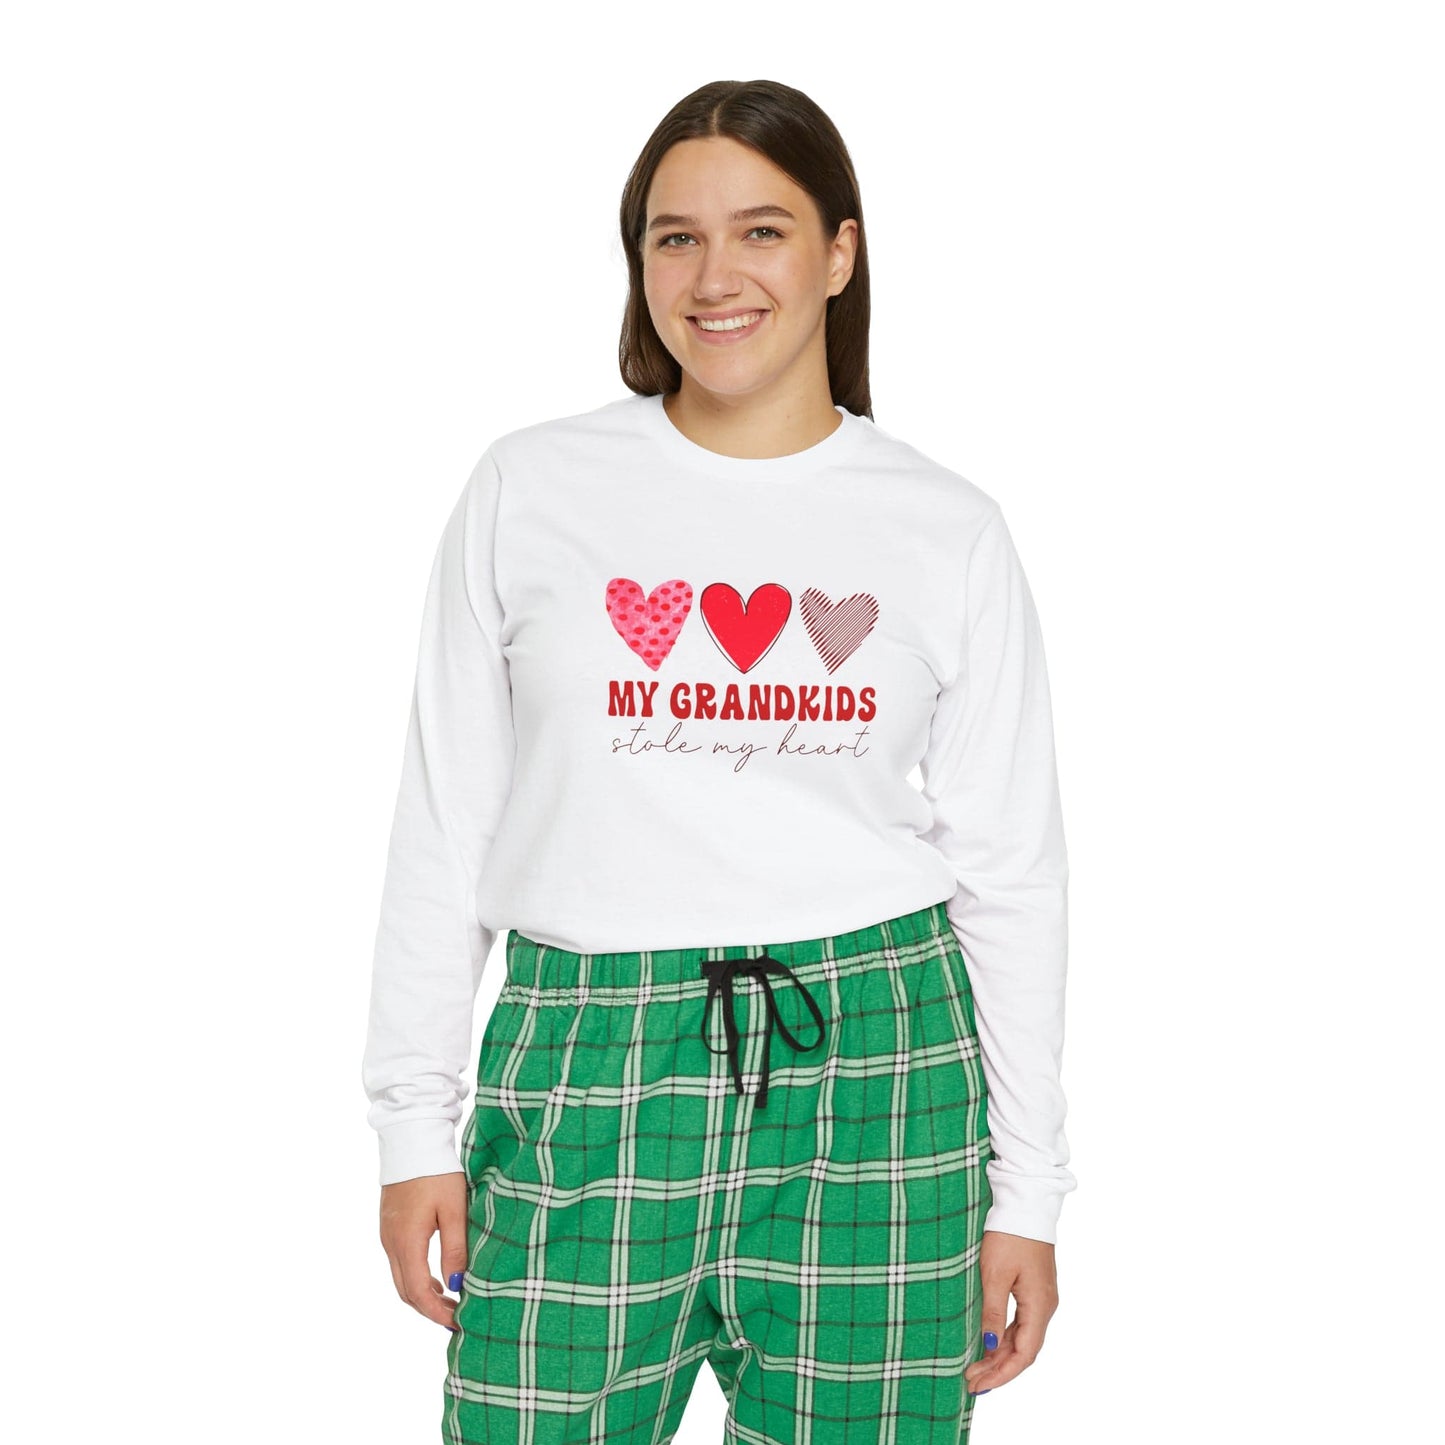 My Grandkids Stole My Heart Women's Long Sleeve Pajama Set